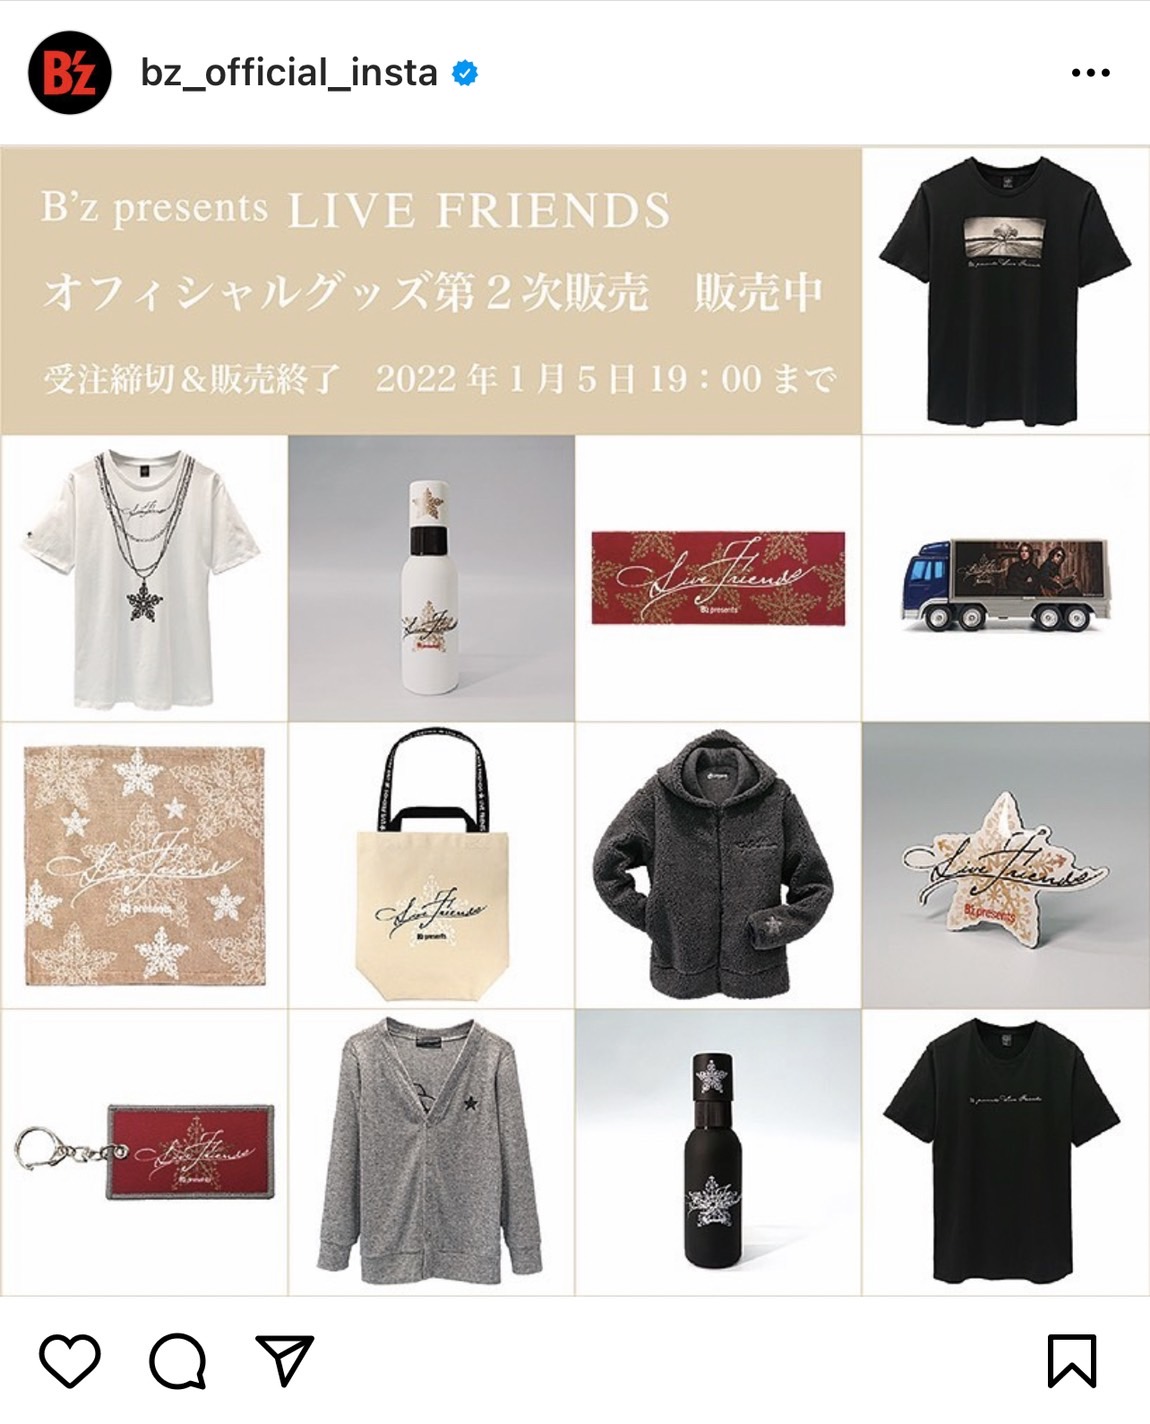 『B’z presents LIVE FRIENDS』グッズ第2次販売を告知するInstagram投稿の画像